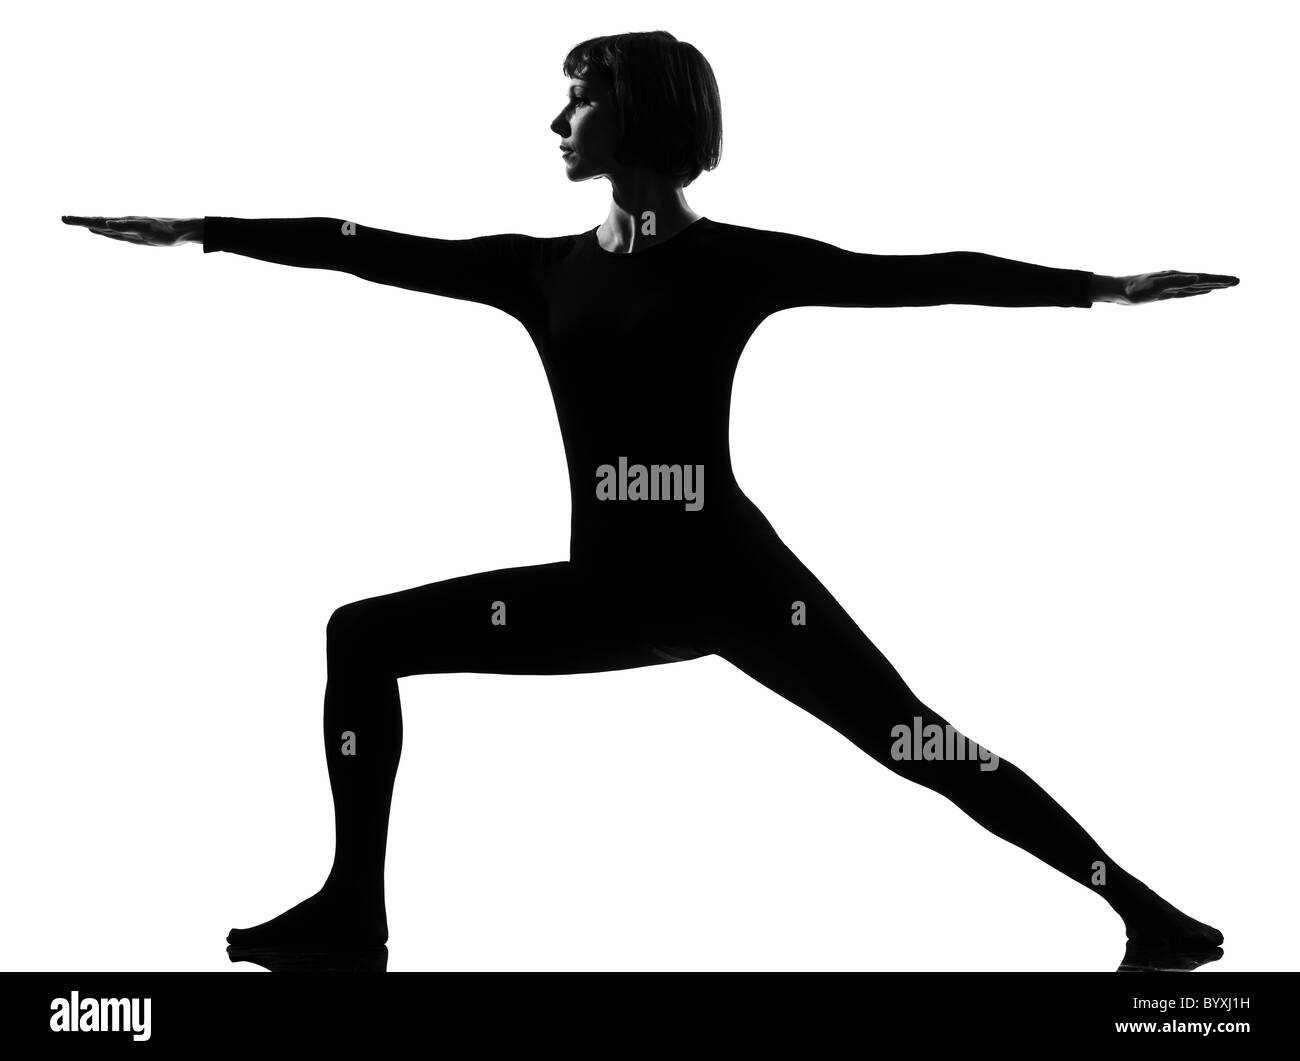 woman virabhadrasana warrior 2 postion yoga pose posture position in silouhette on studio white background Stock Photo